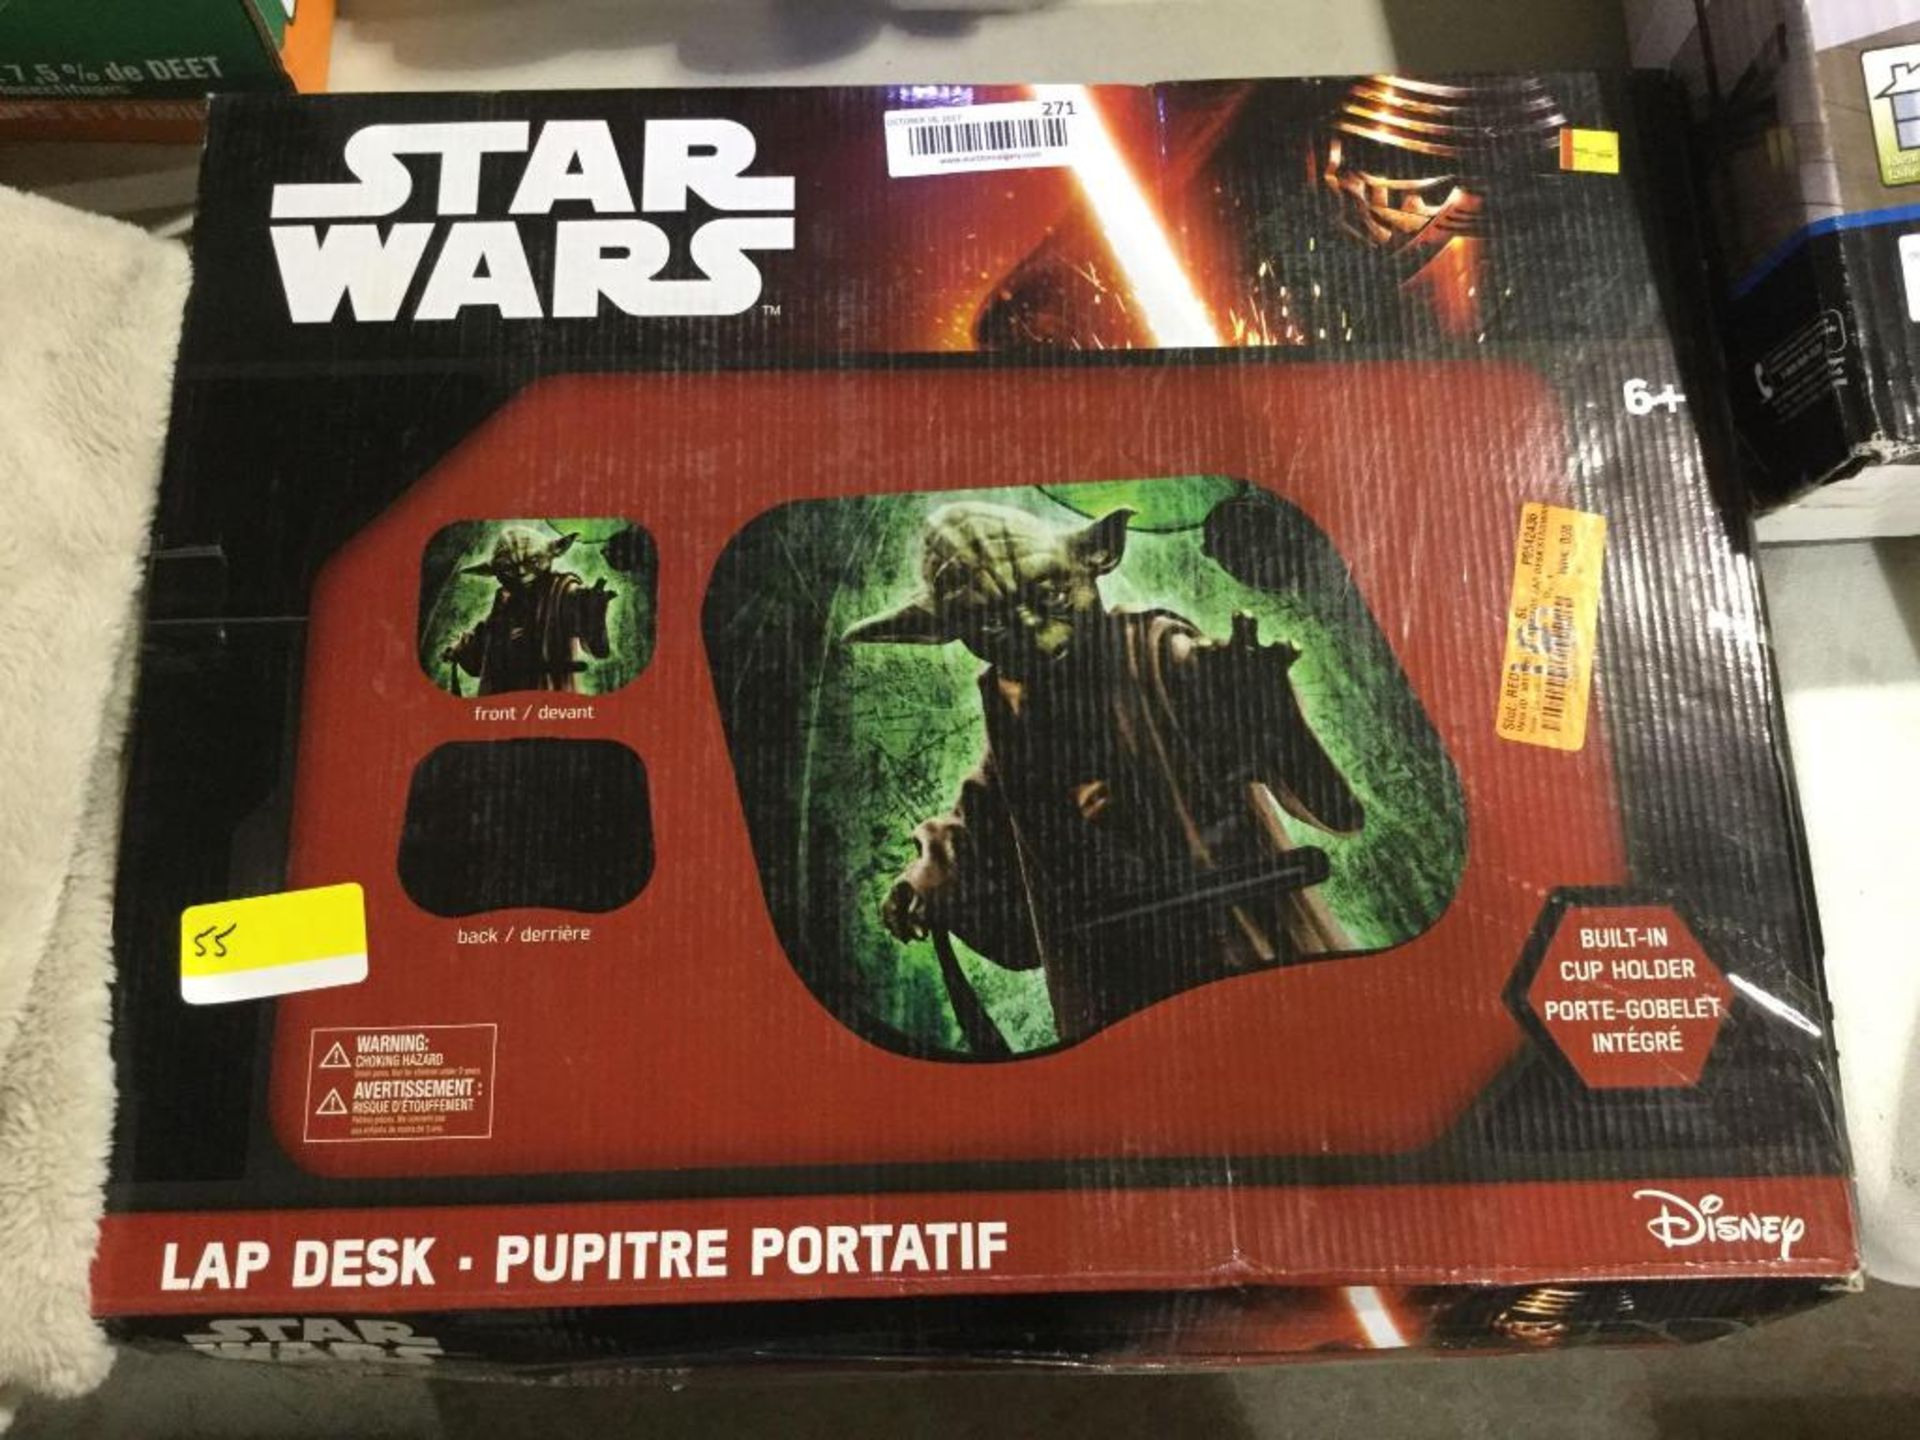 Star Wars Lap desk - Yoda